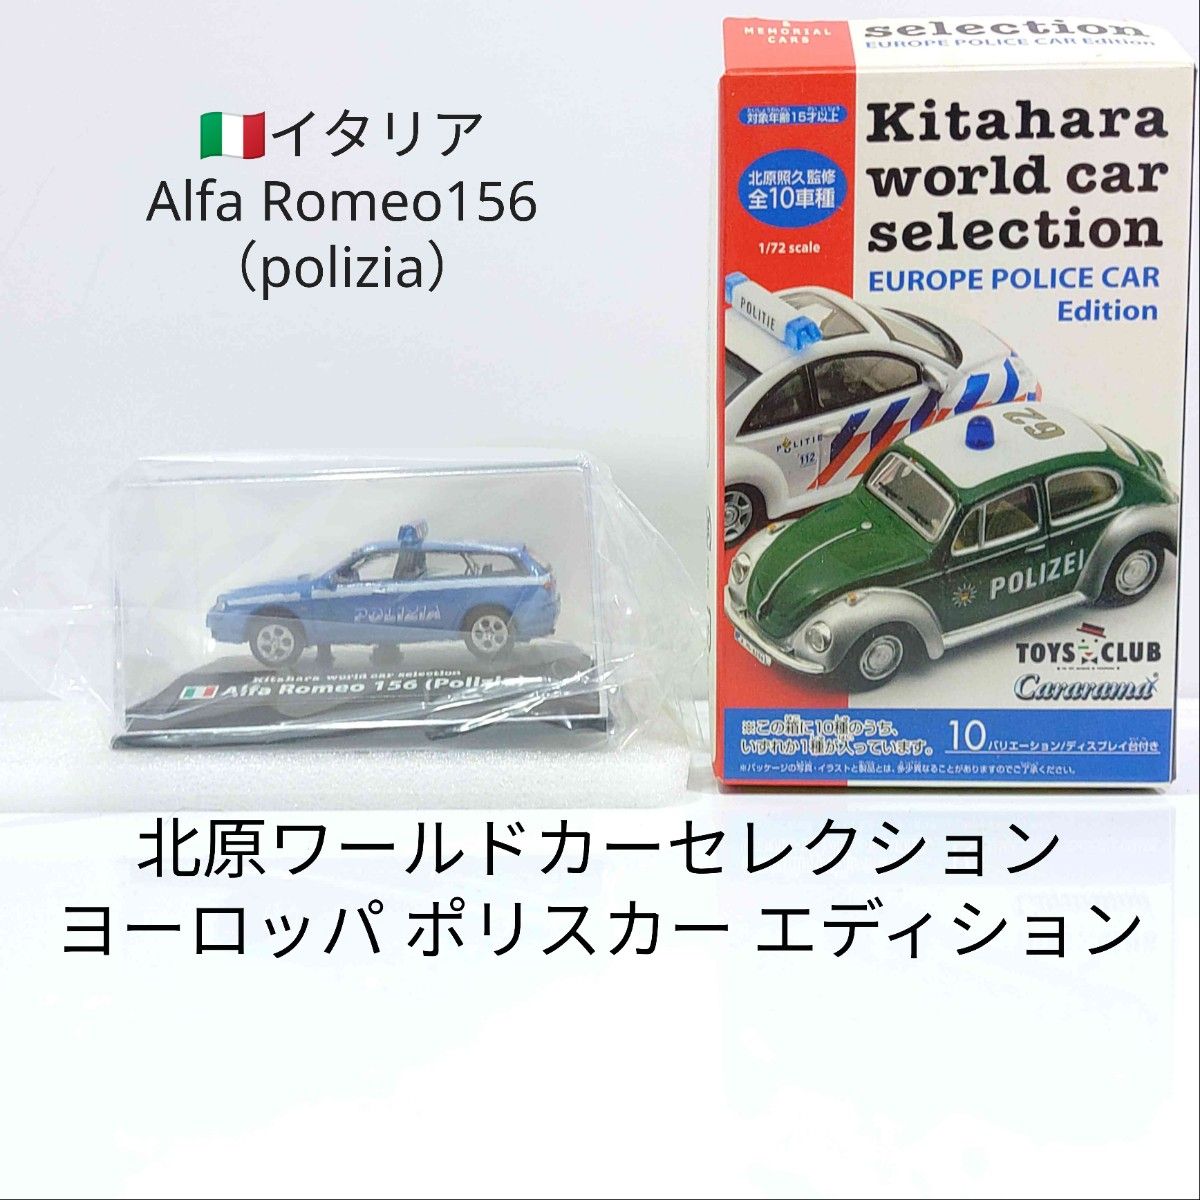 Kitahara world car selection EUROPE POLICE CAR Alfa Romeo 156